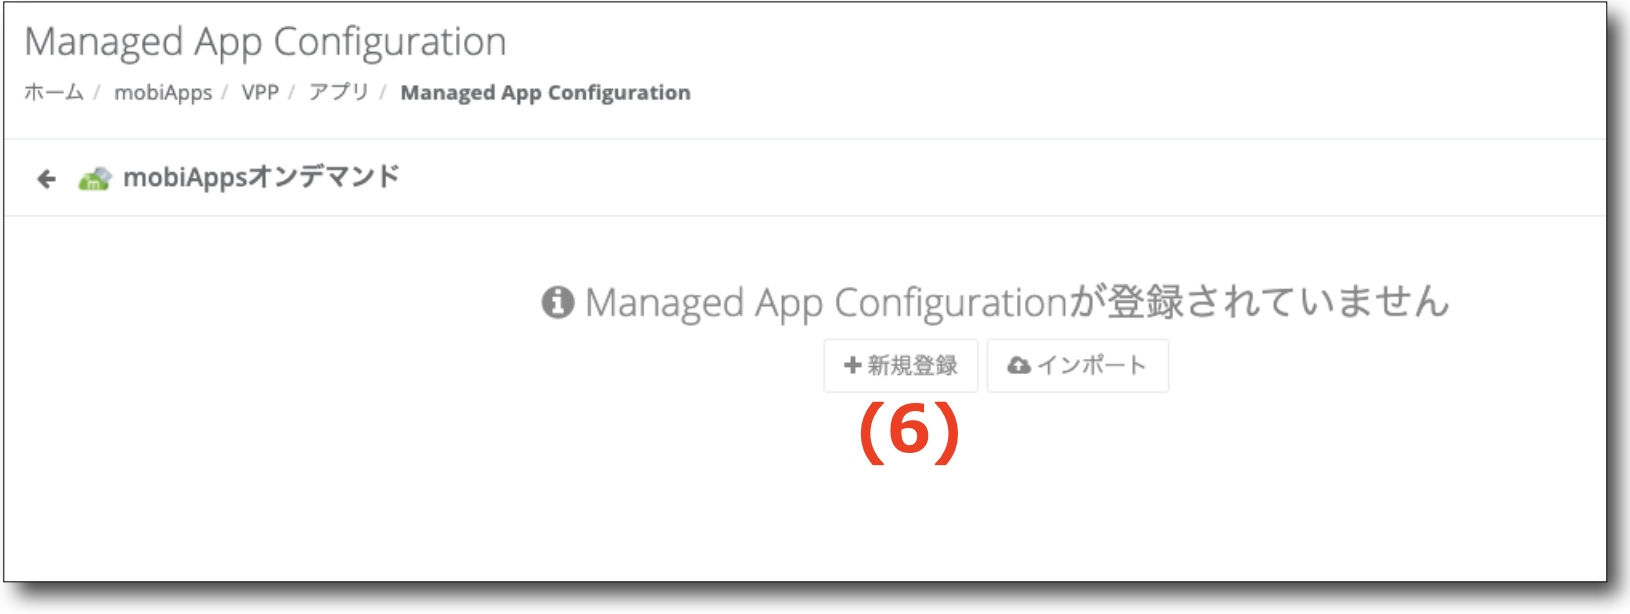 Managed App Configuration